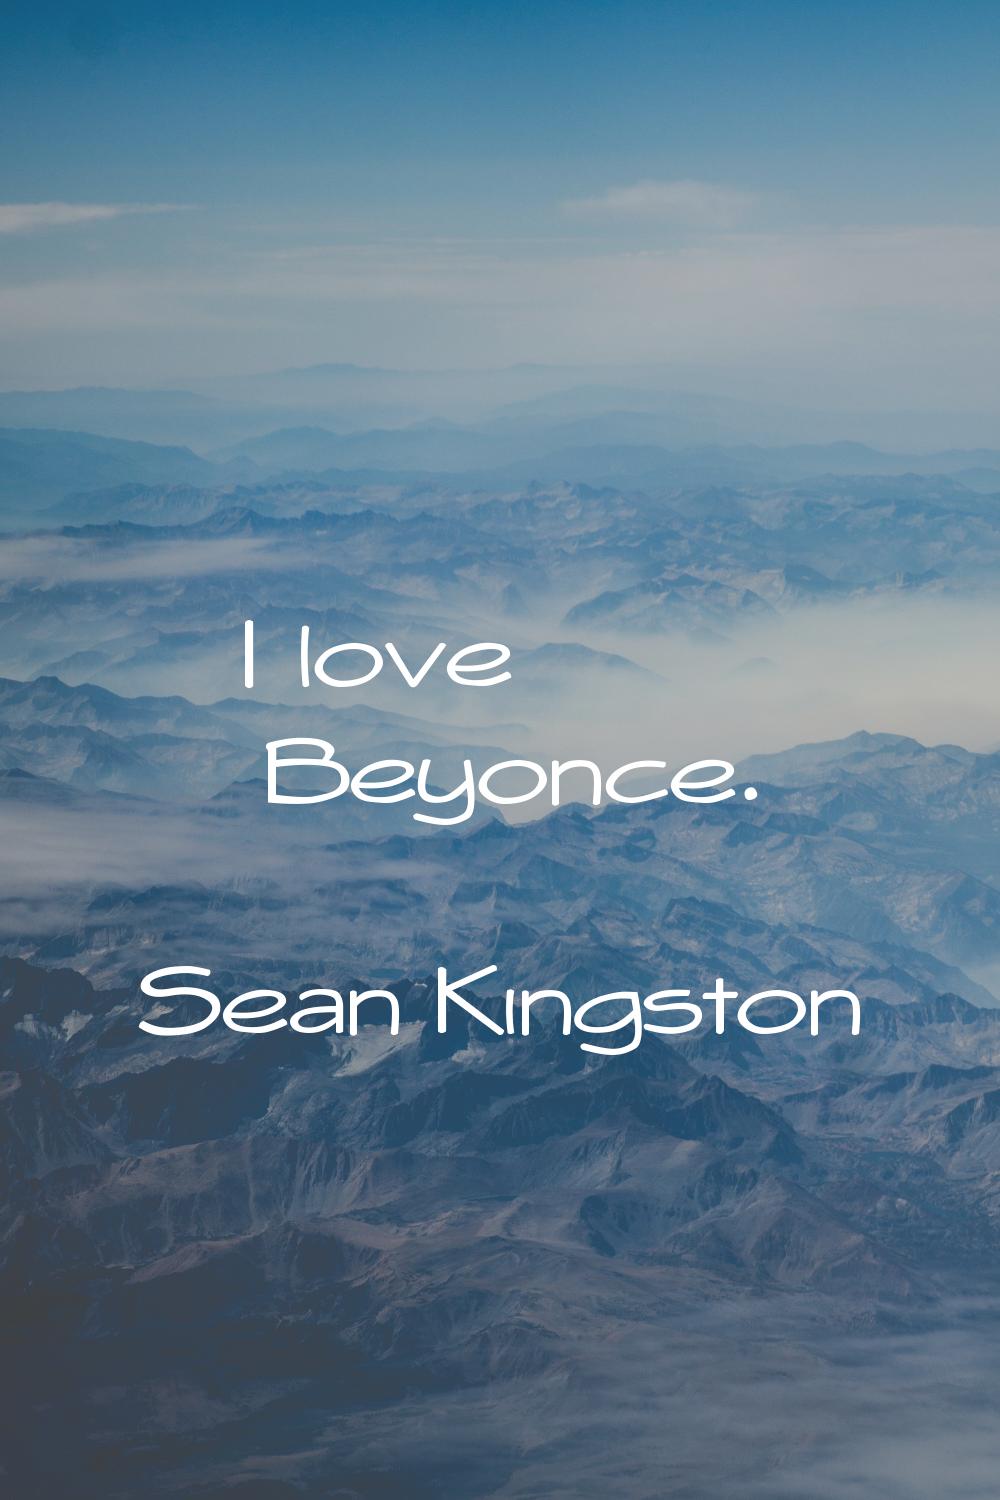 I love Beyonce.